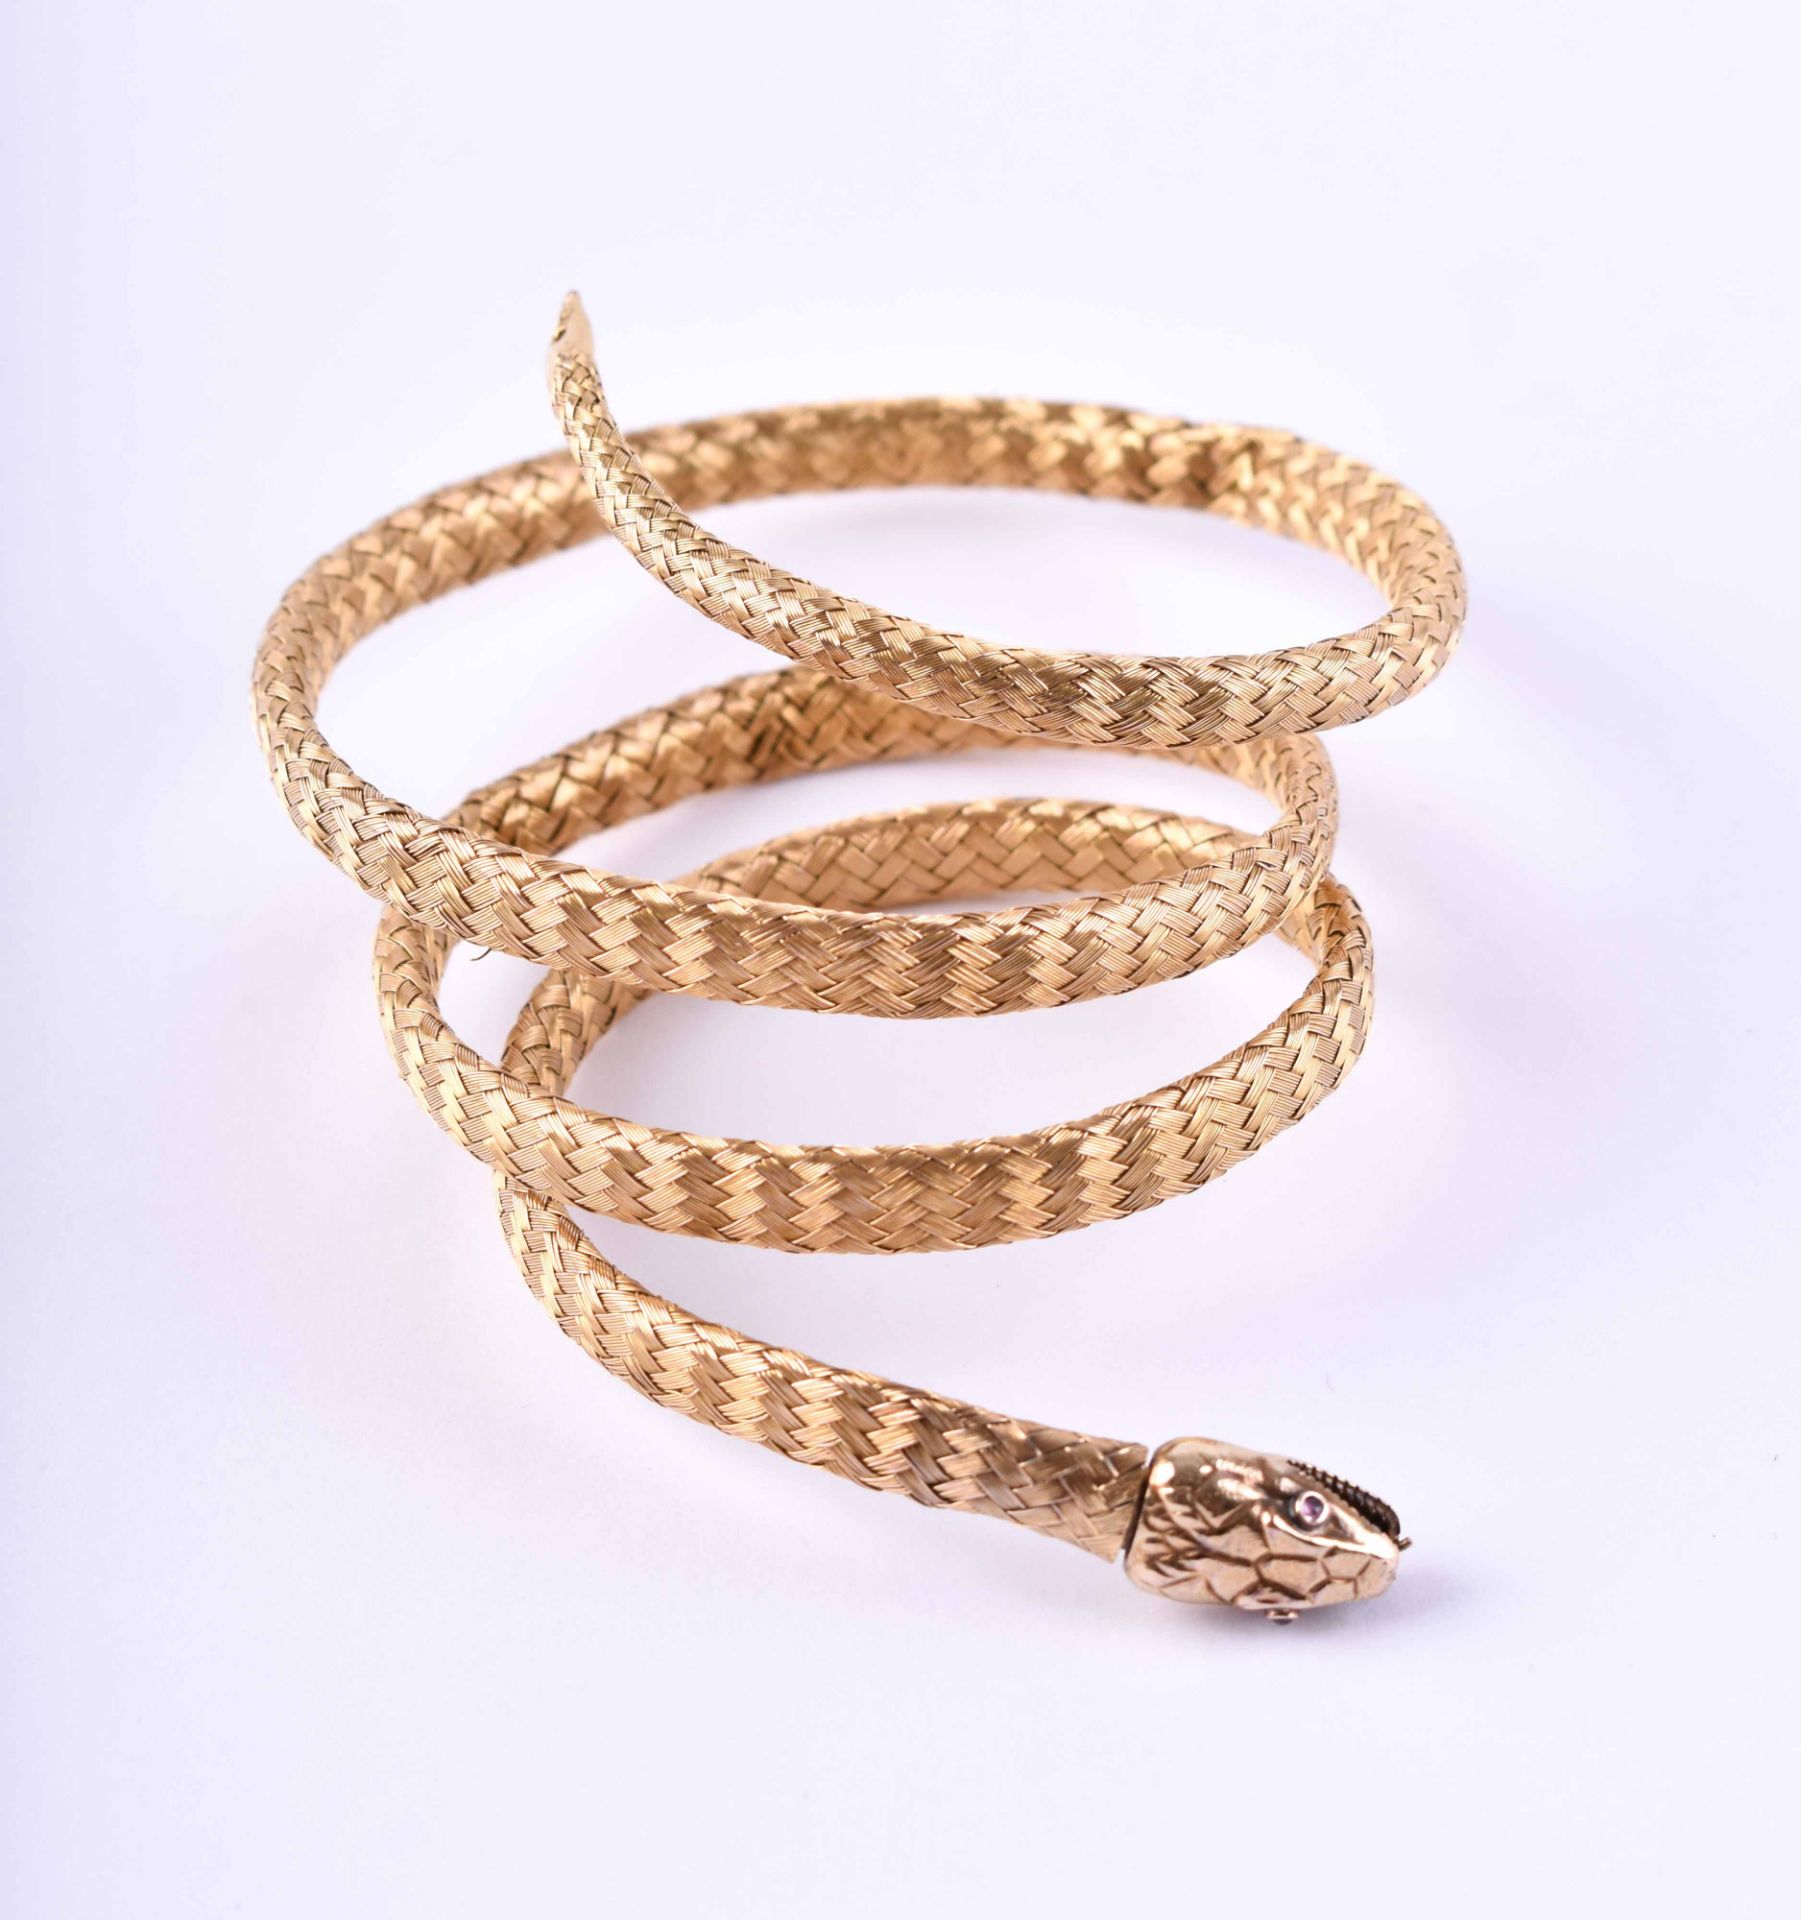  Snake bracelet 19th century